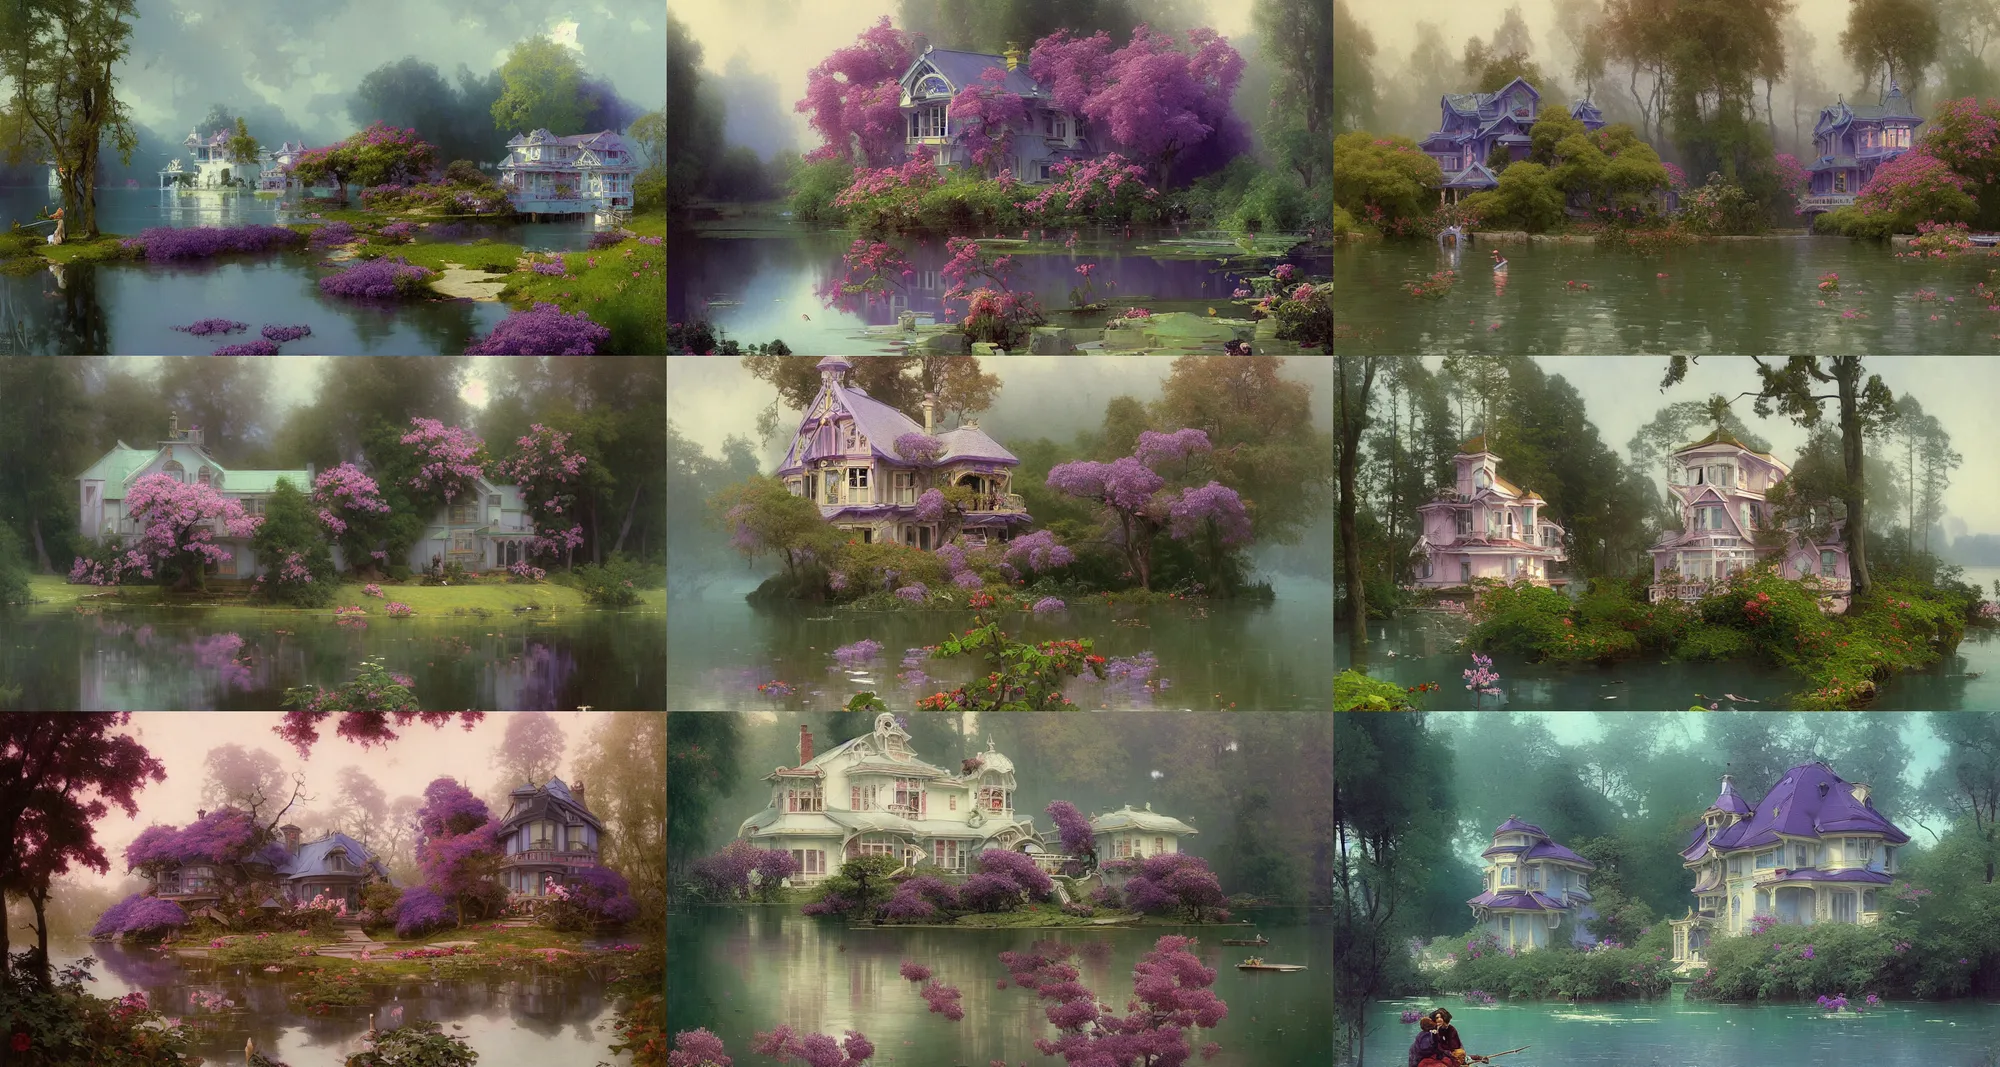 Prompt: small lake house in lilac bushes, art nouveau architecture, fantasy, art by joseph leyendecker, peter mohrbacher, ivan aivazovsky, ruan jia, reza afshar, marc simonetti, alphonse mucha